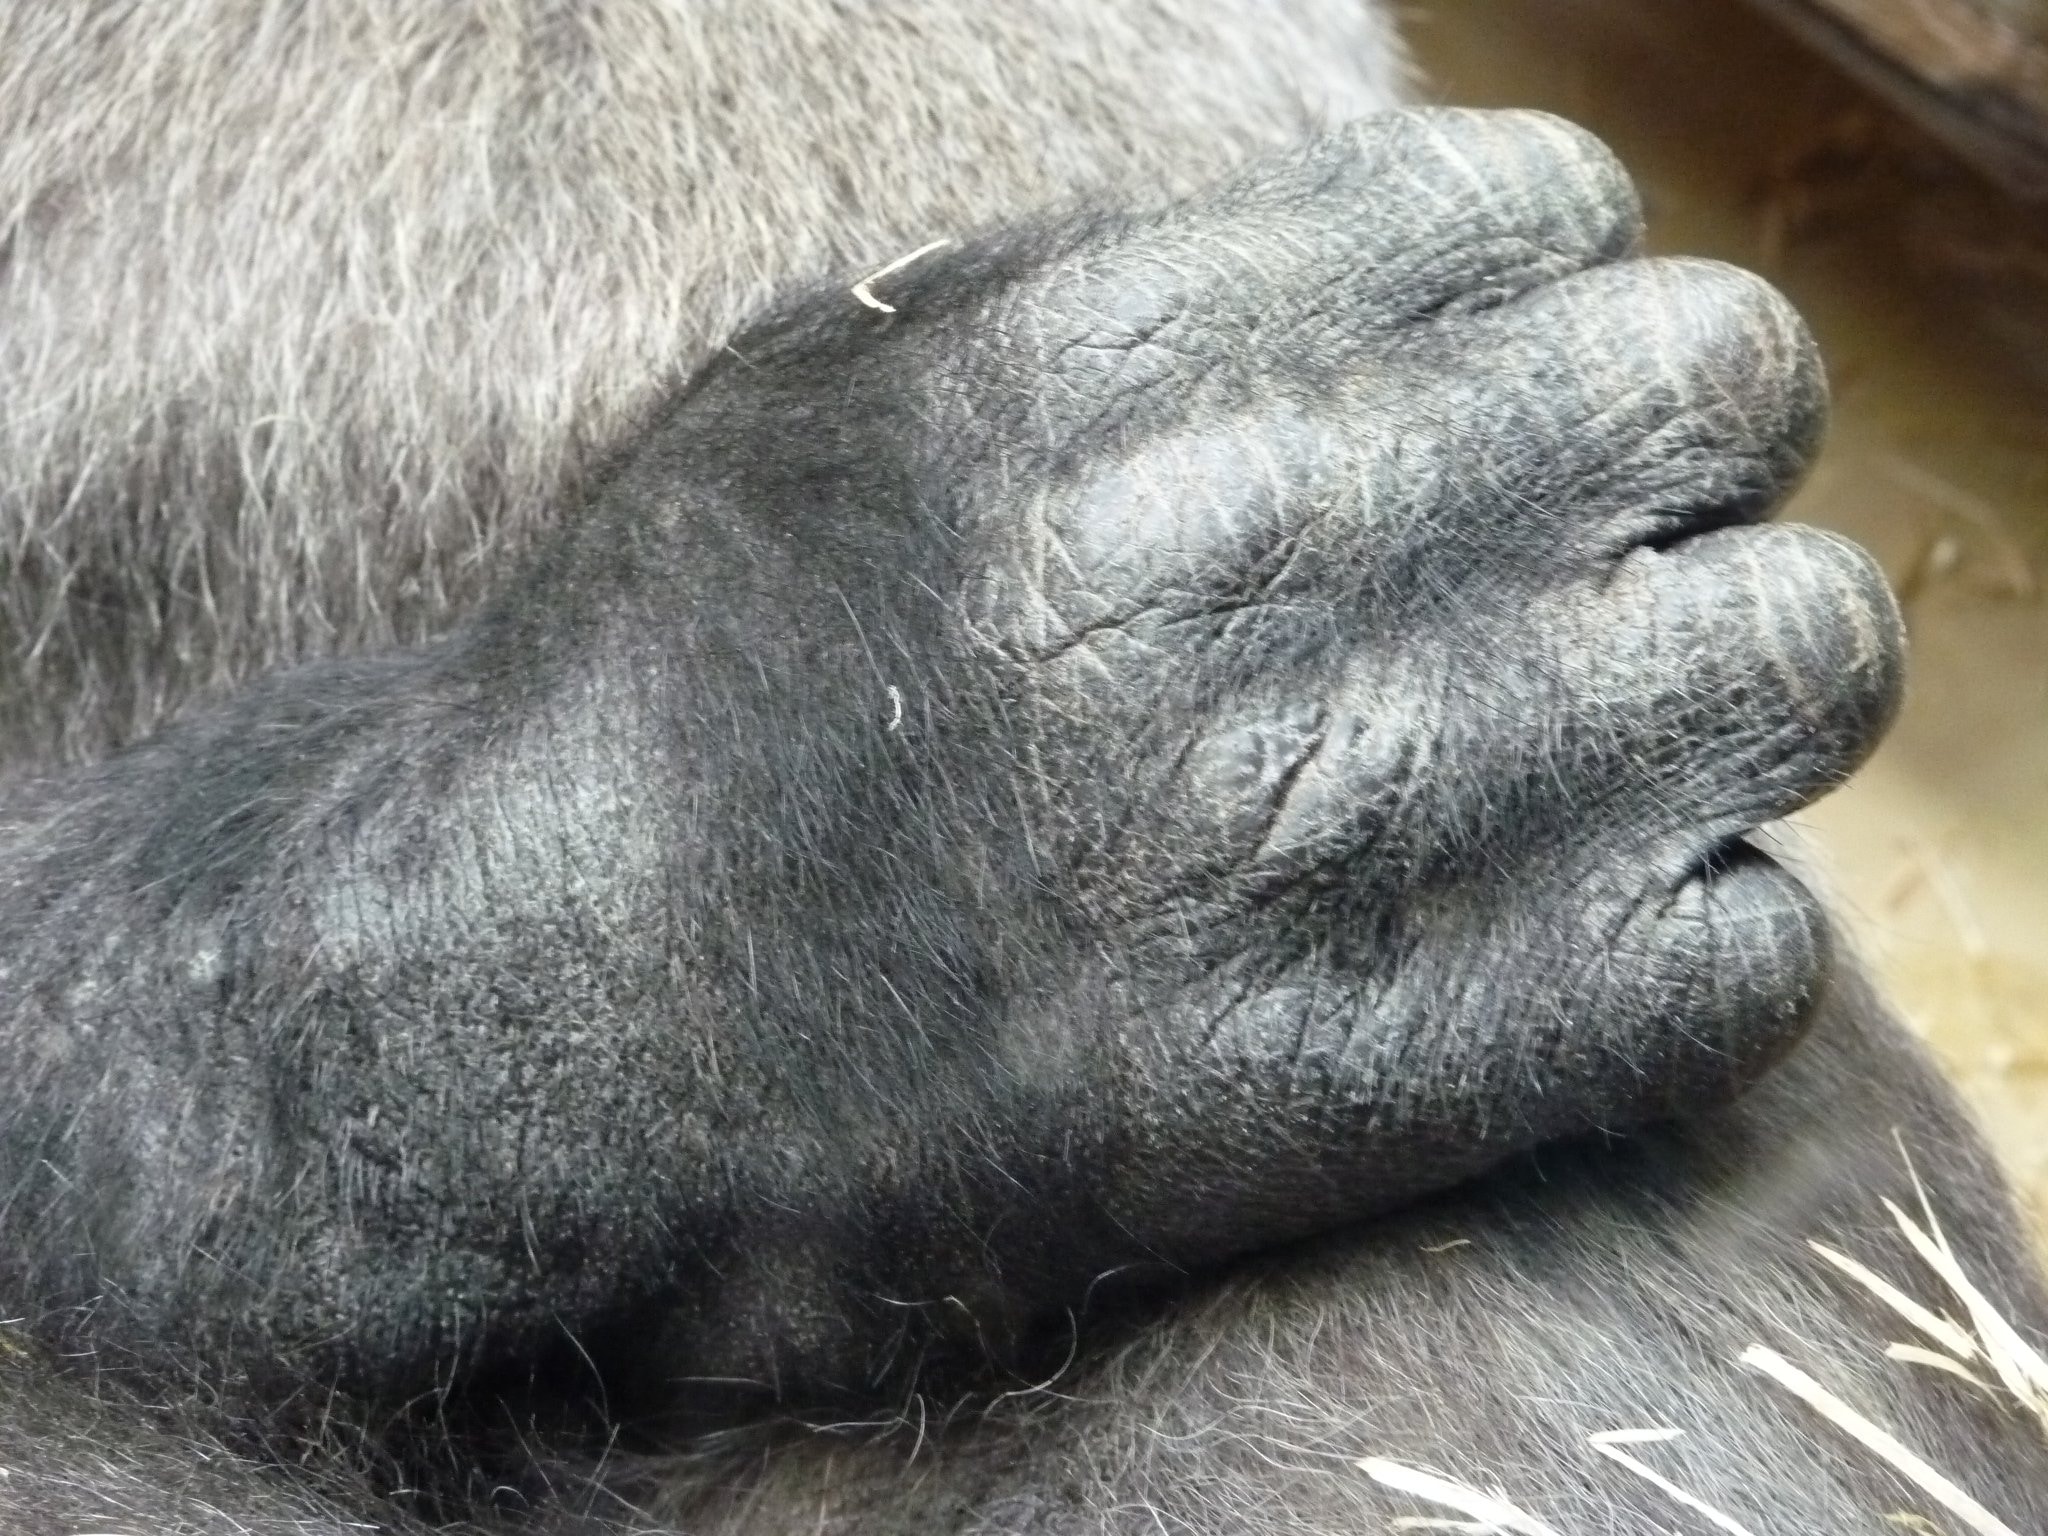 right hand orangutan